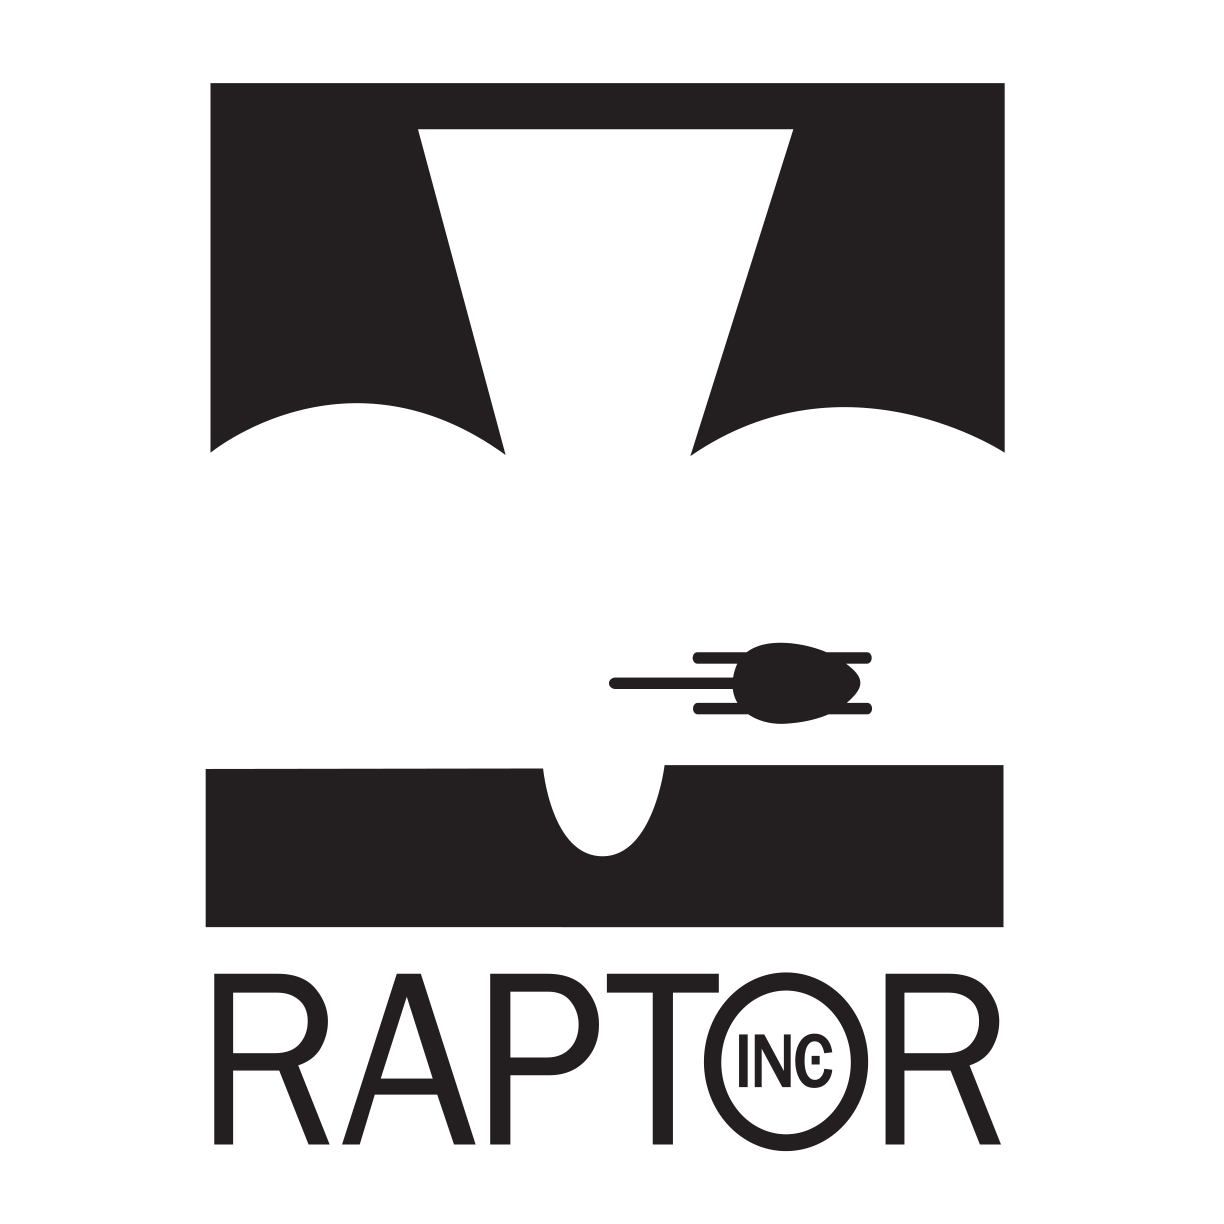 RAPTOR Inc. logo